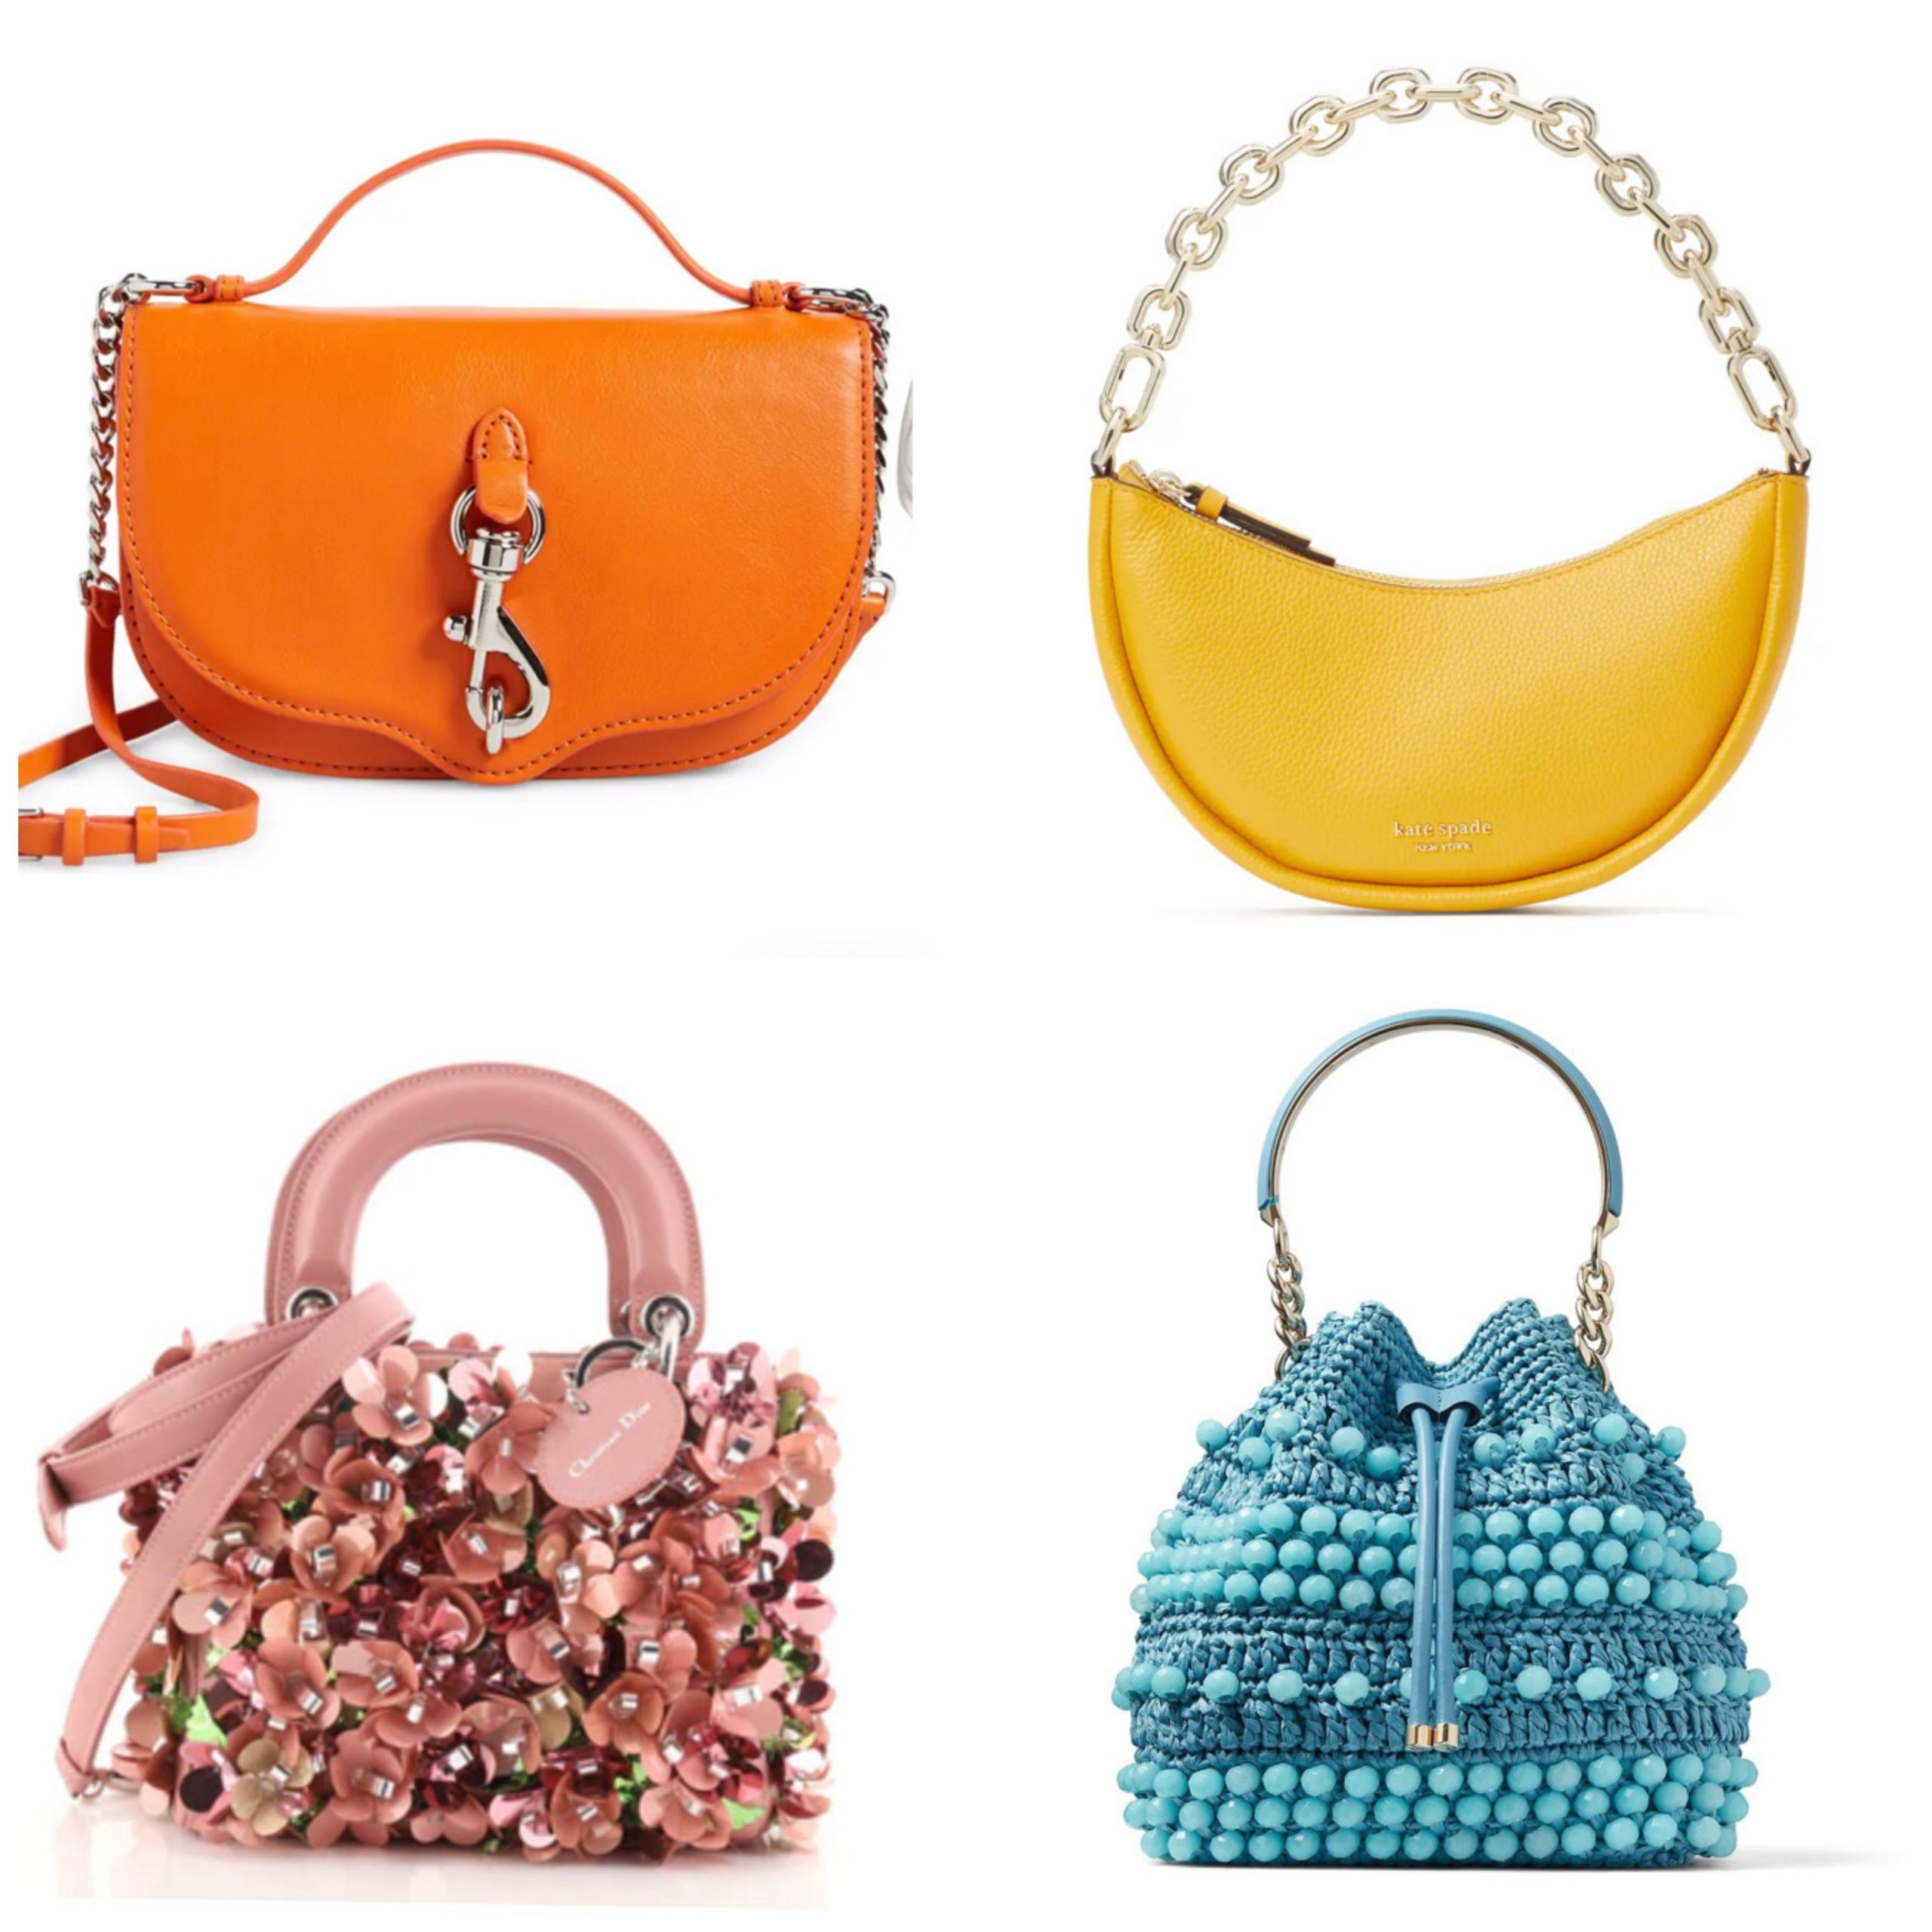 shop-luxury-designer-bags-handbags-on-sale